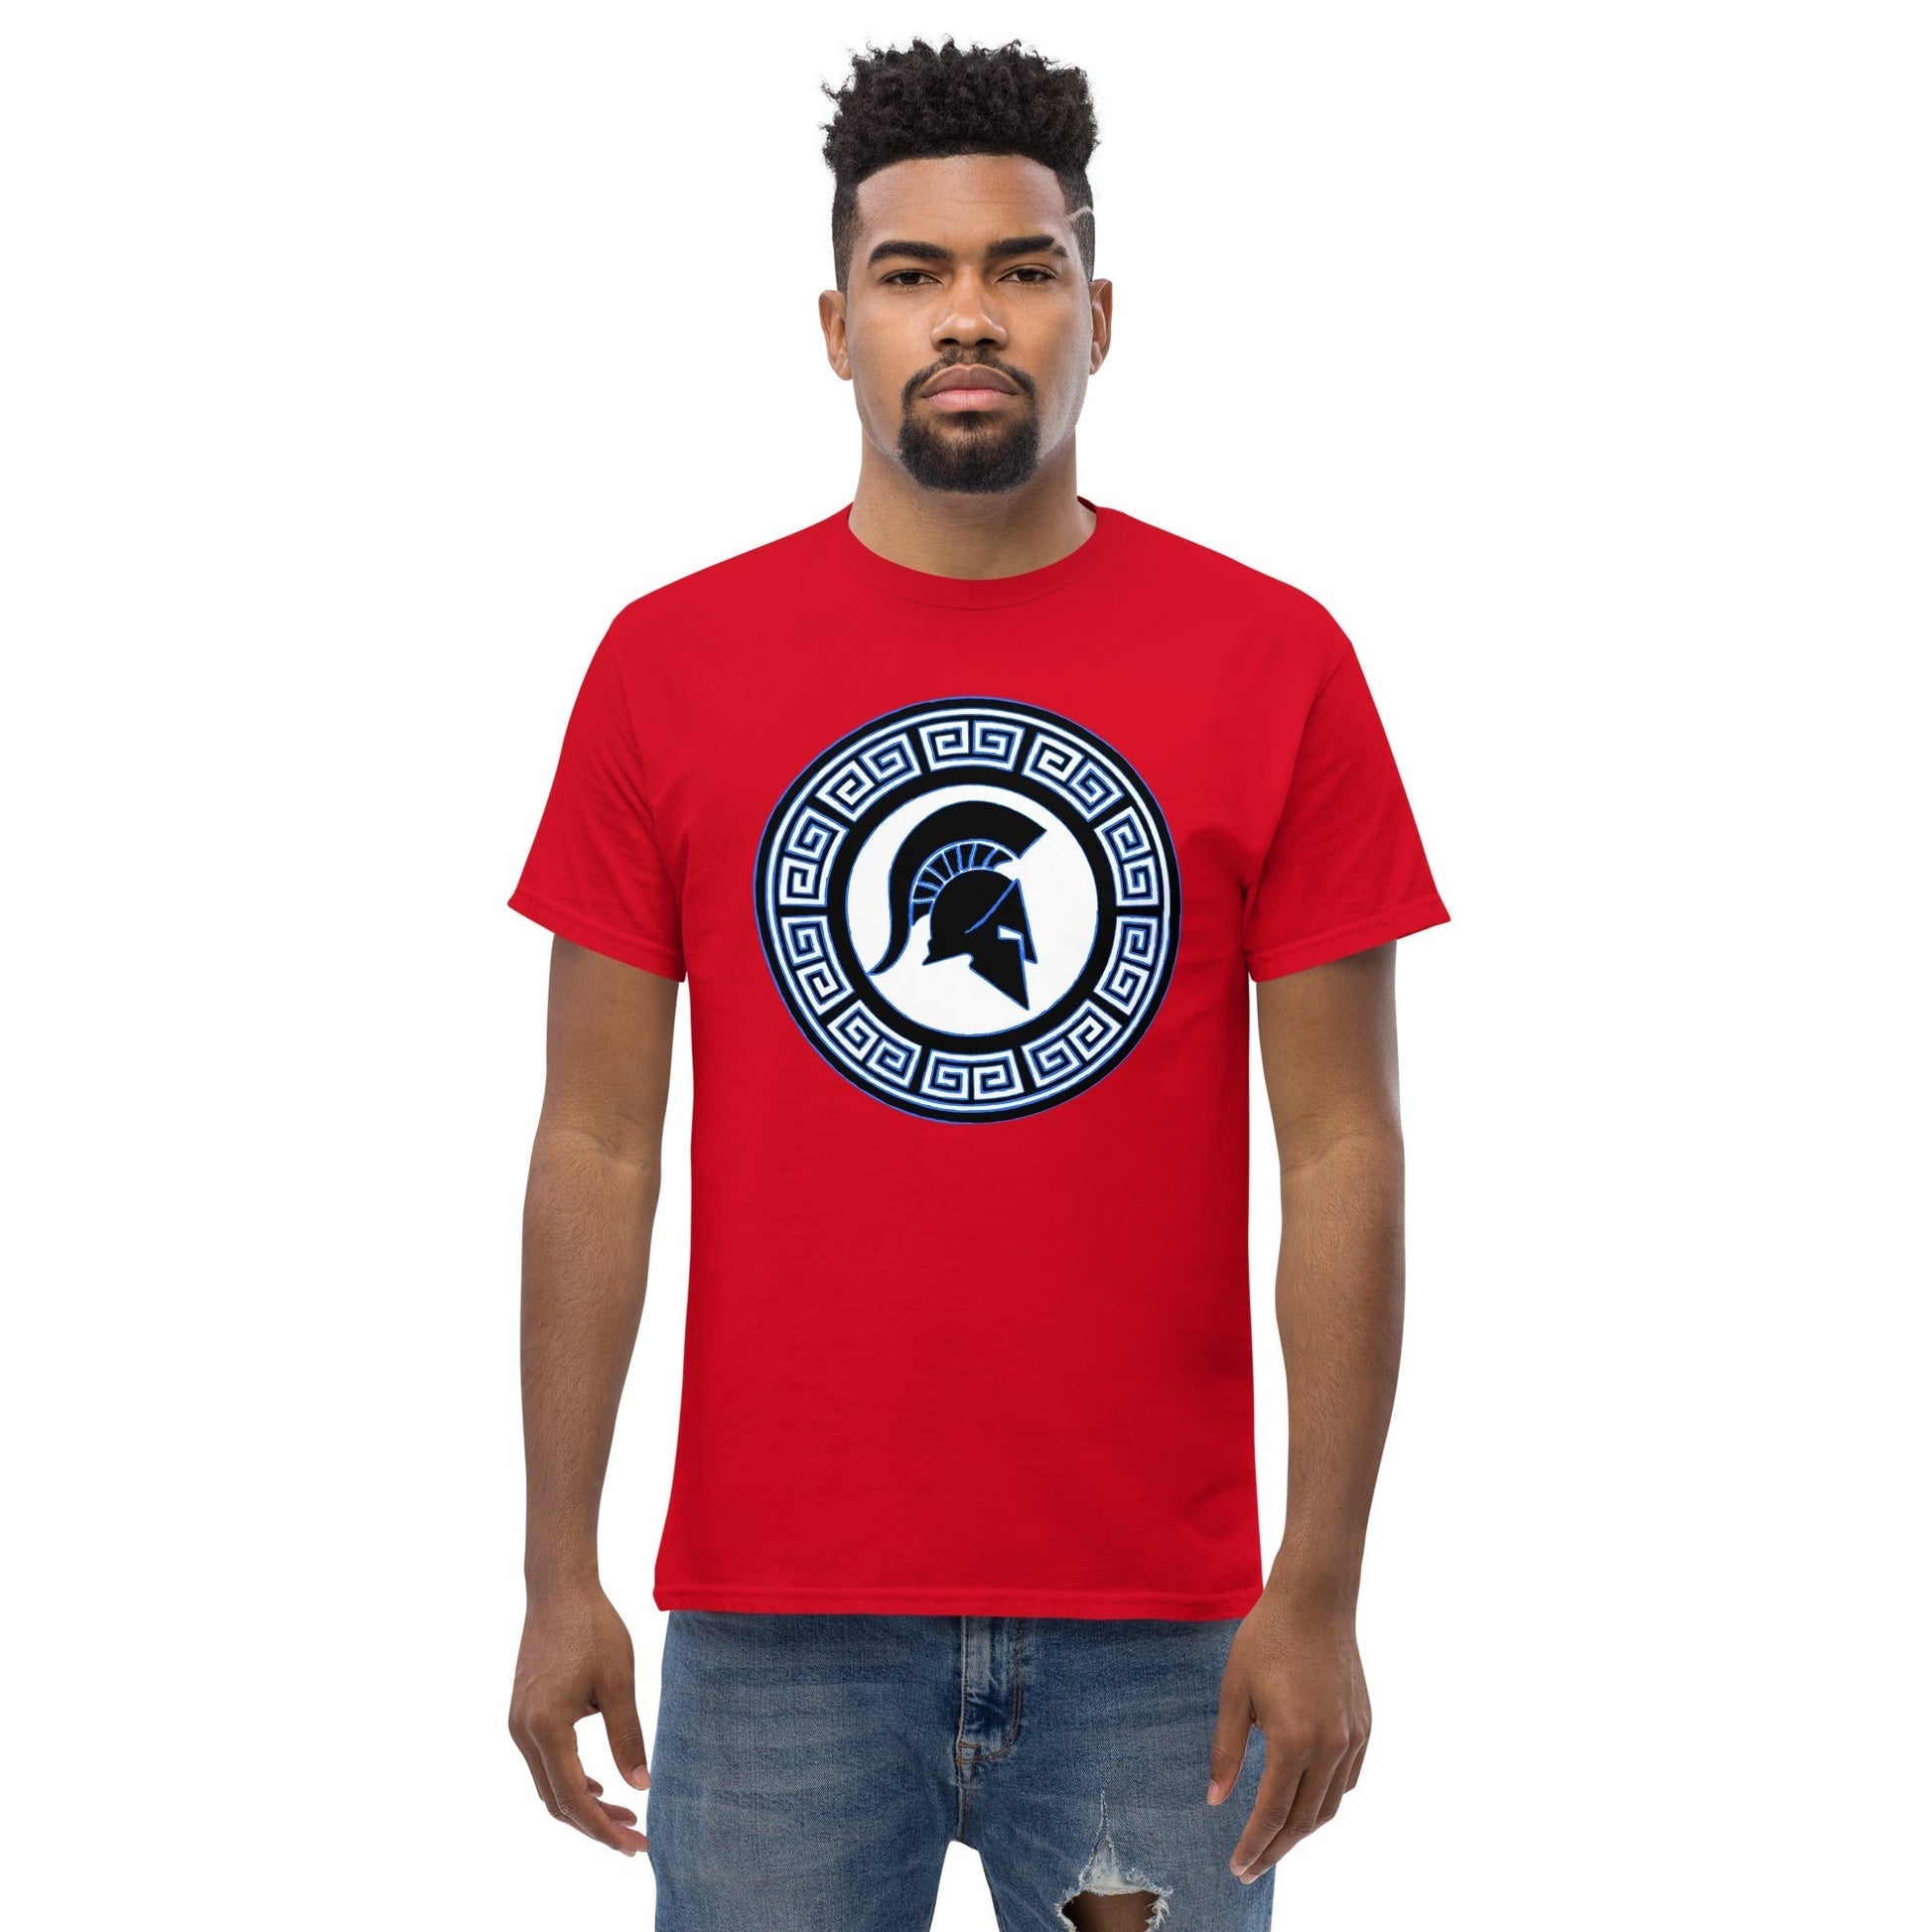 Scar Design T shirt Spartan Warrior Shield T-shirt